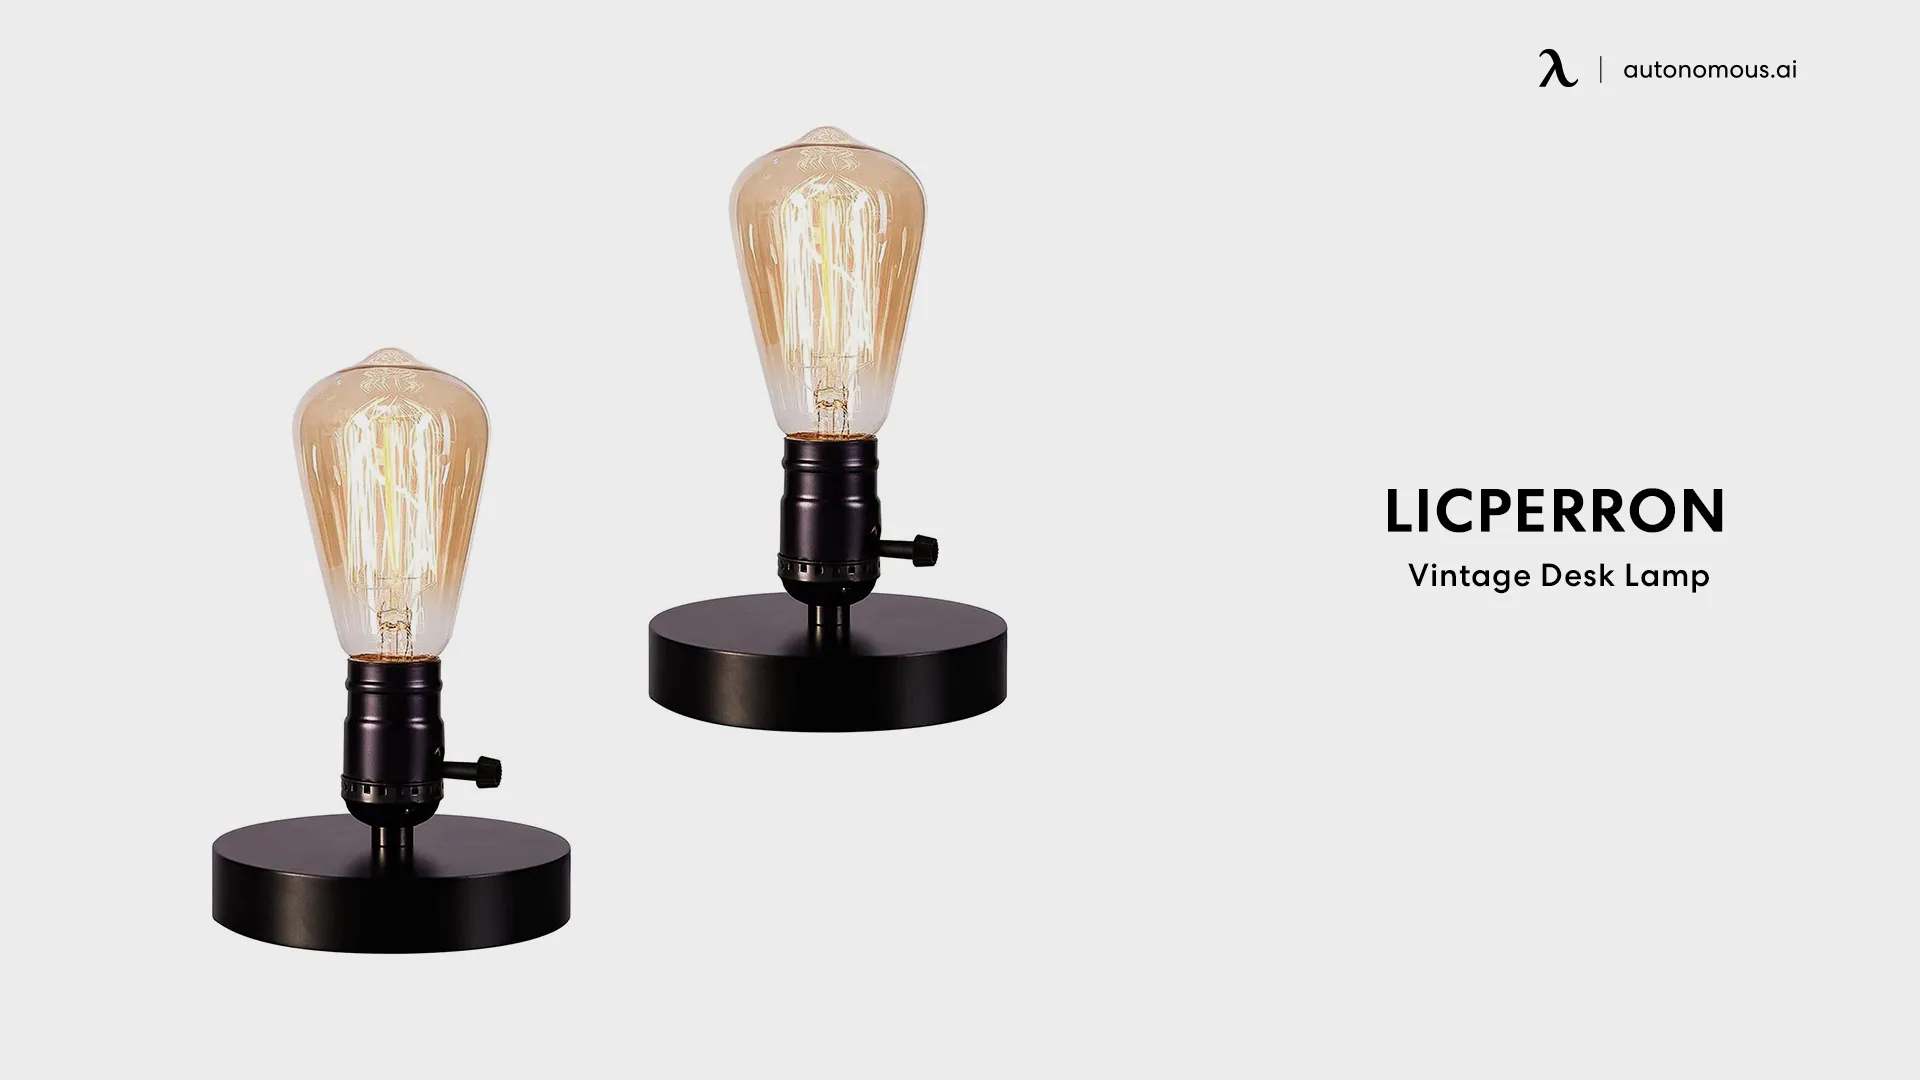 Licperron Vintage Desk Lamp